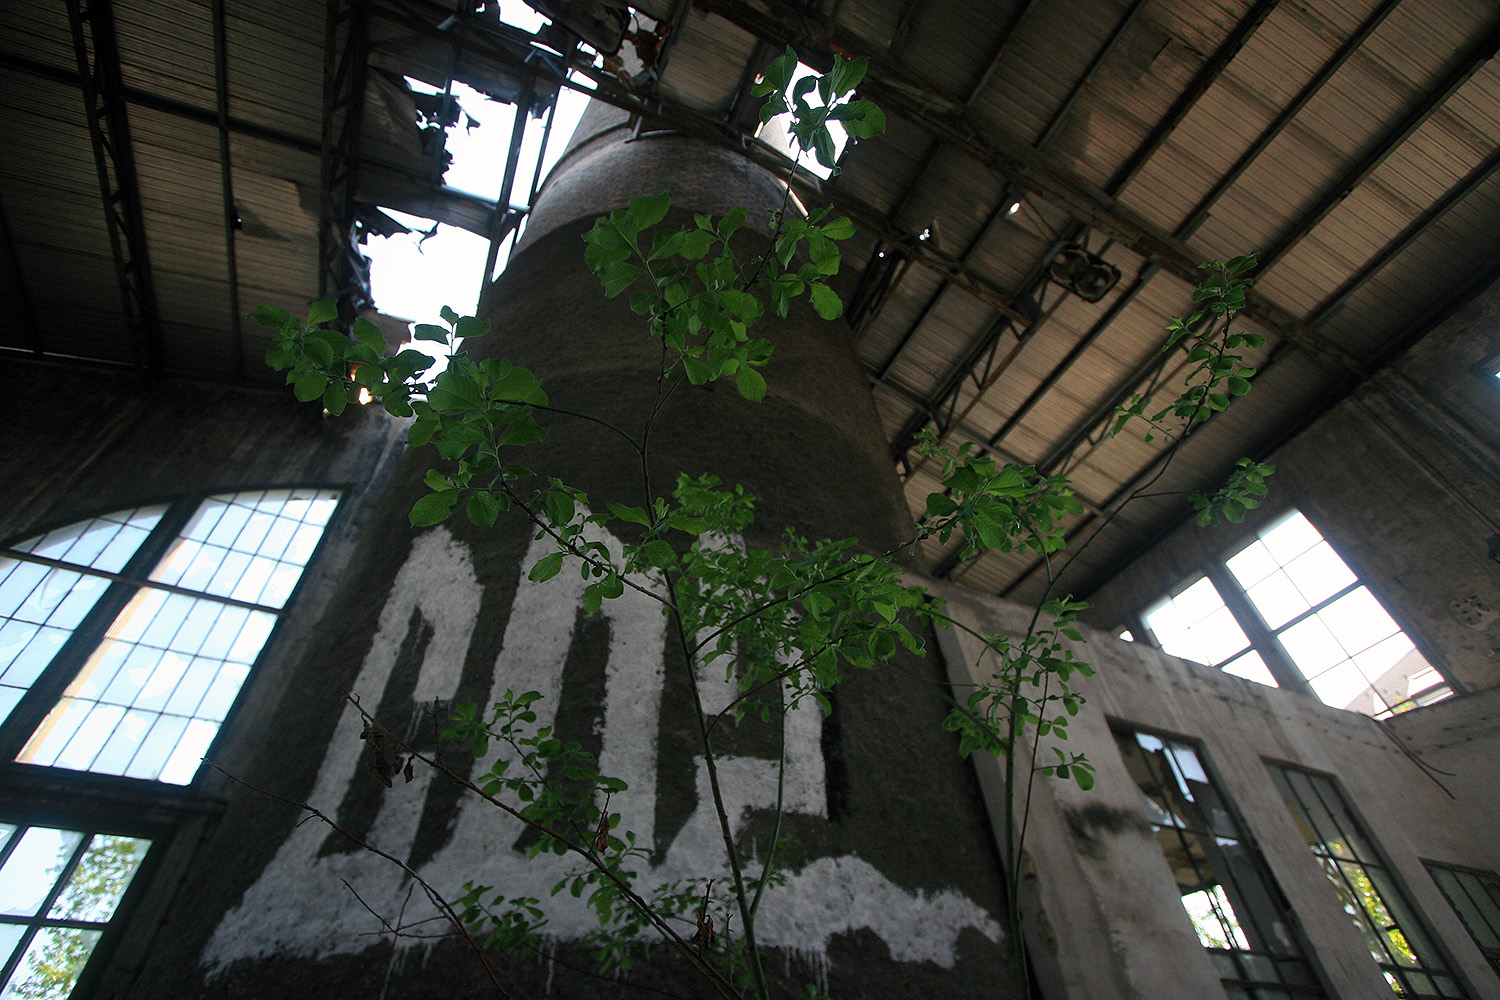 Inside An Abandoned Socialist Textile Factory